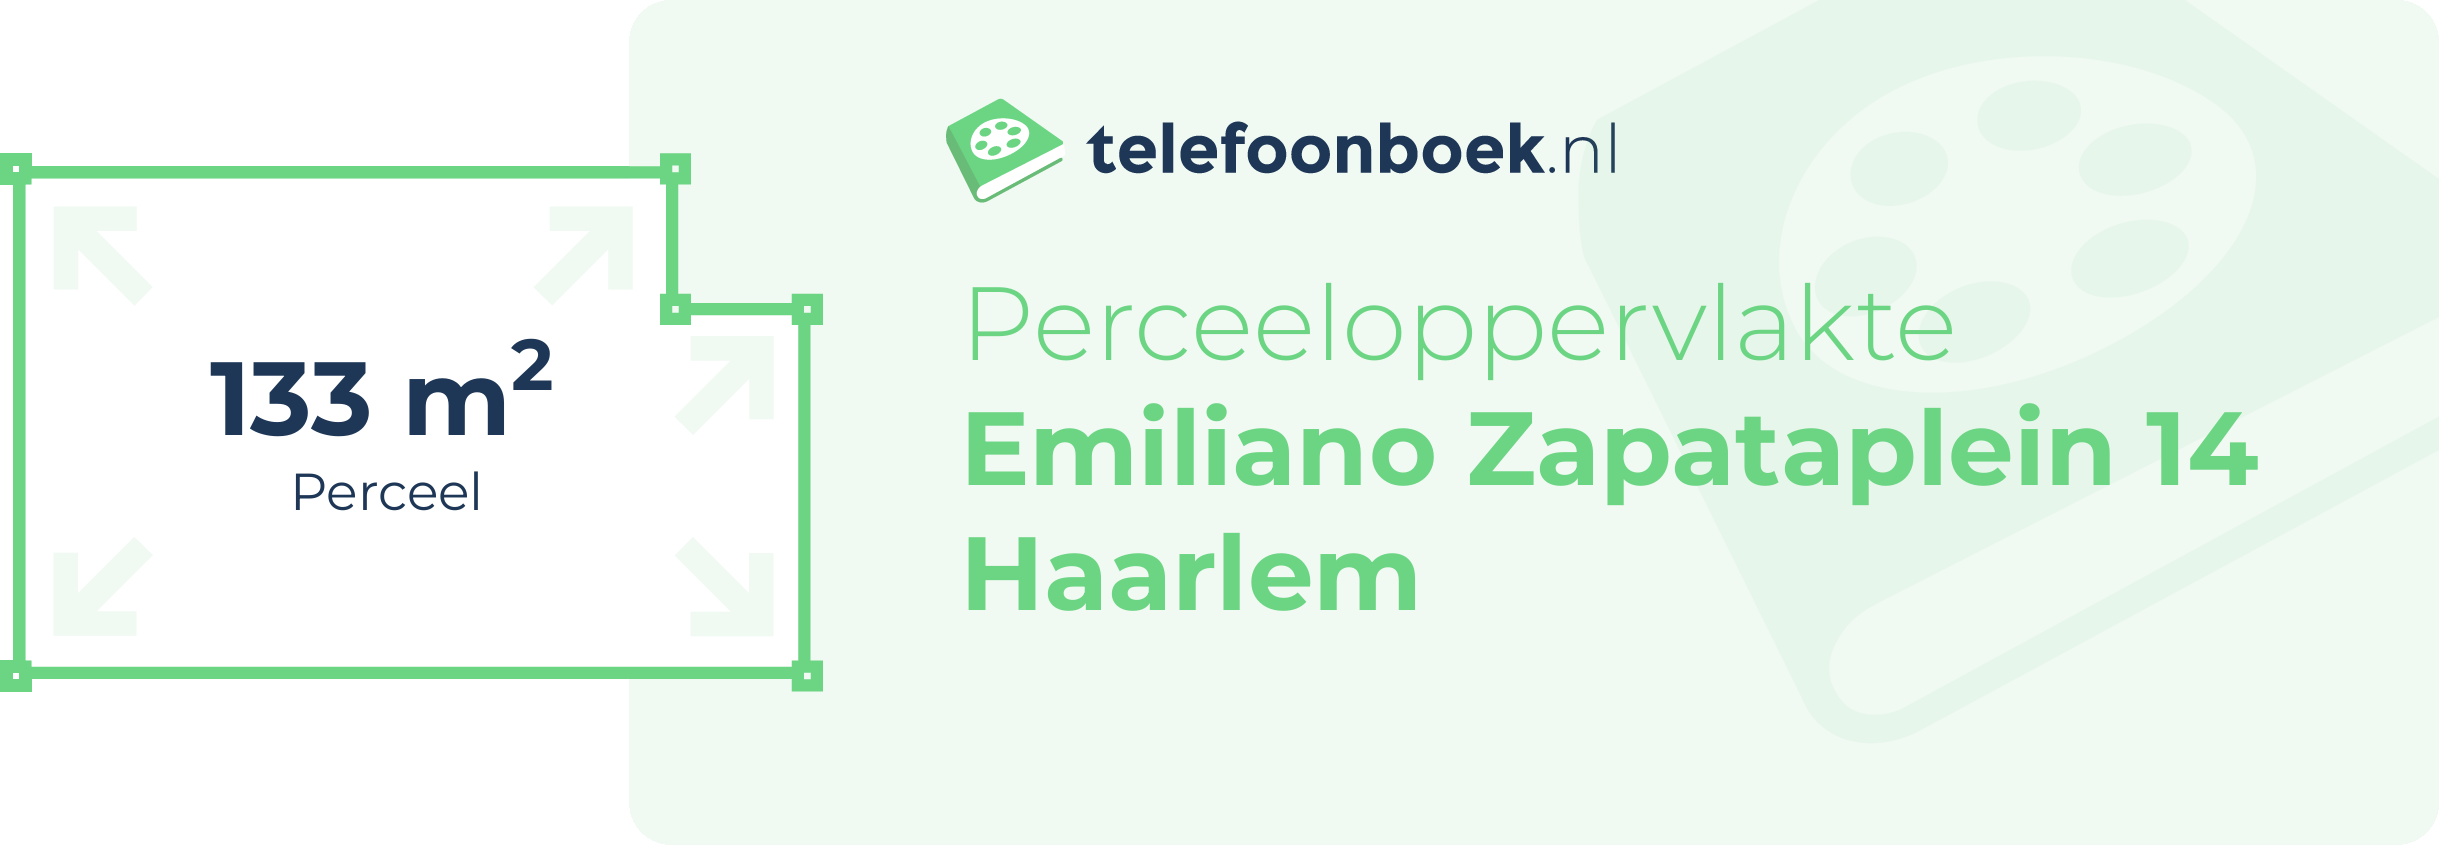 Perceeloppervlakte Emiliano Zapataplein 14 Haarlem